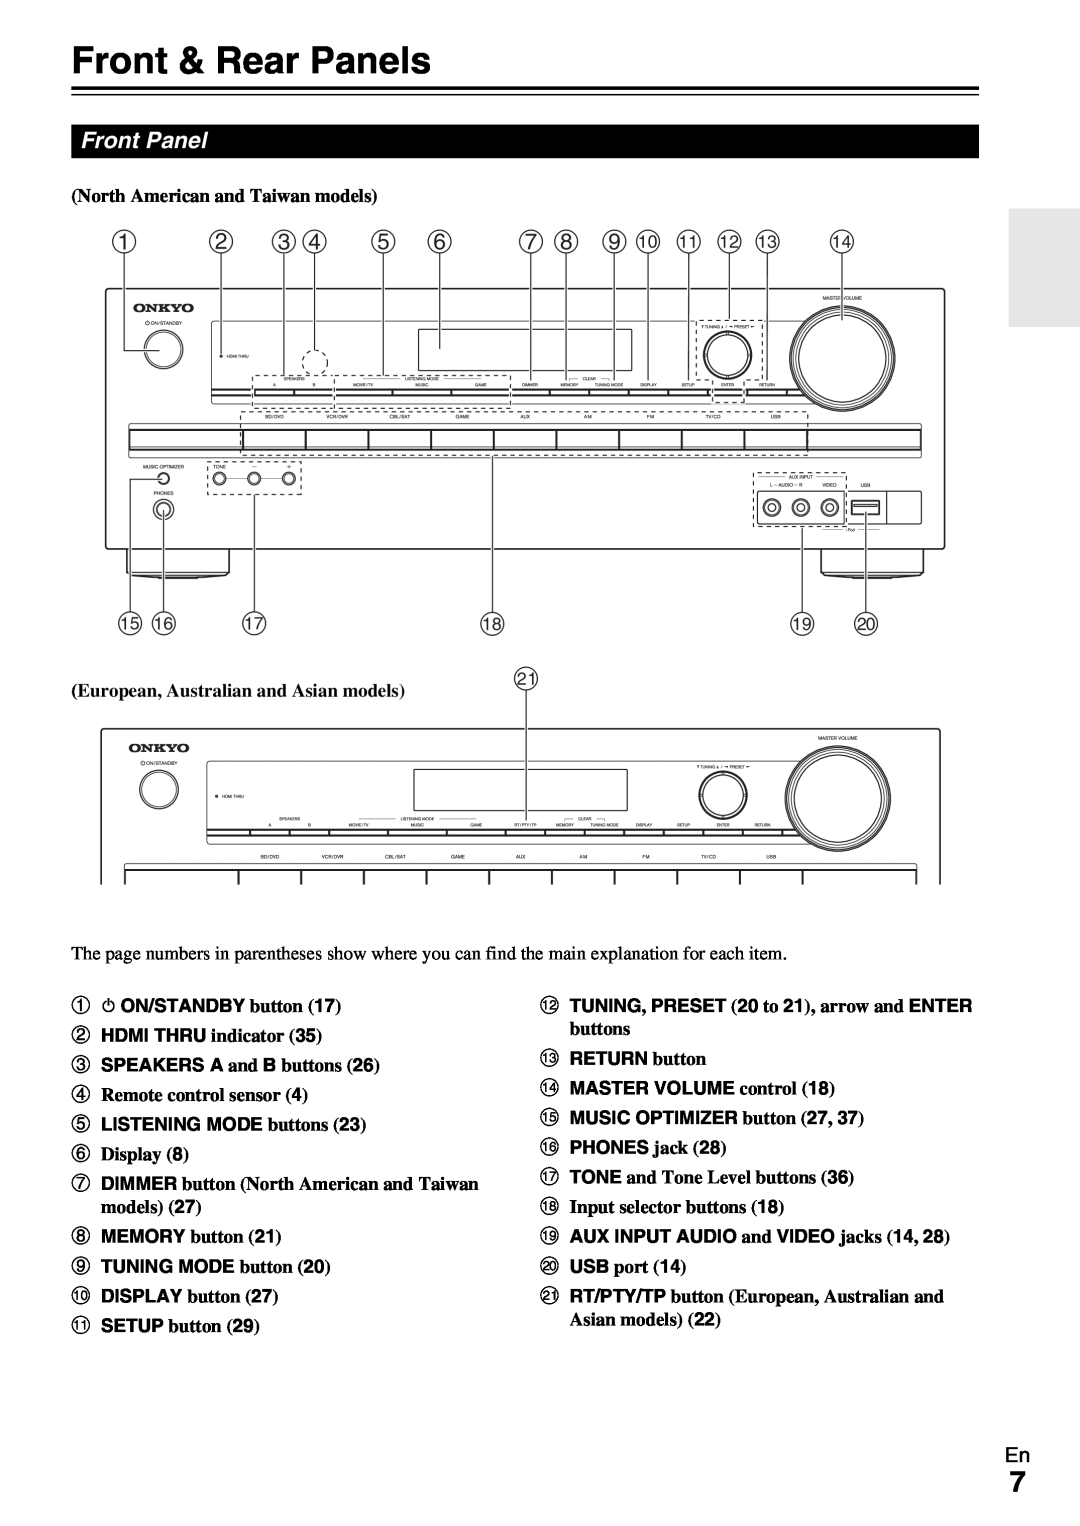 Onkyo TX-SR309 instruction manual Front & Rear Panels, Front Panel, a b c d e f g h i j k l m n, o p q 